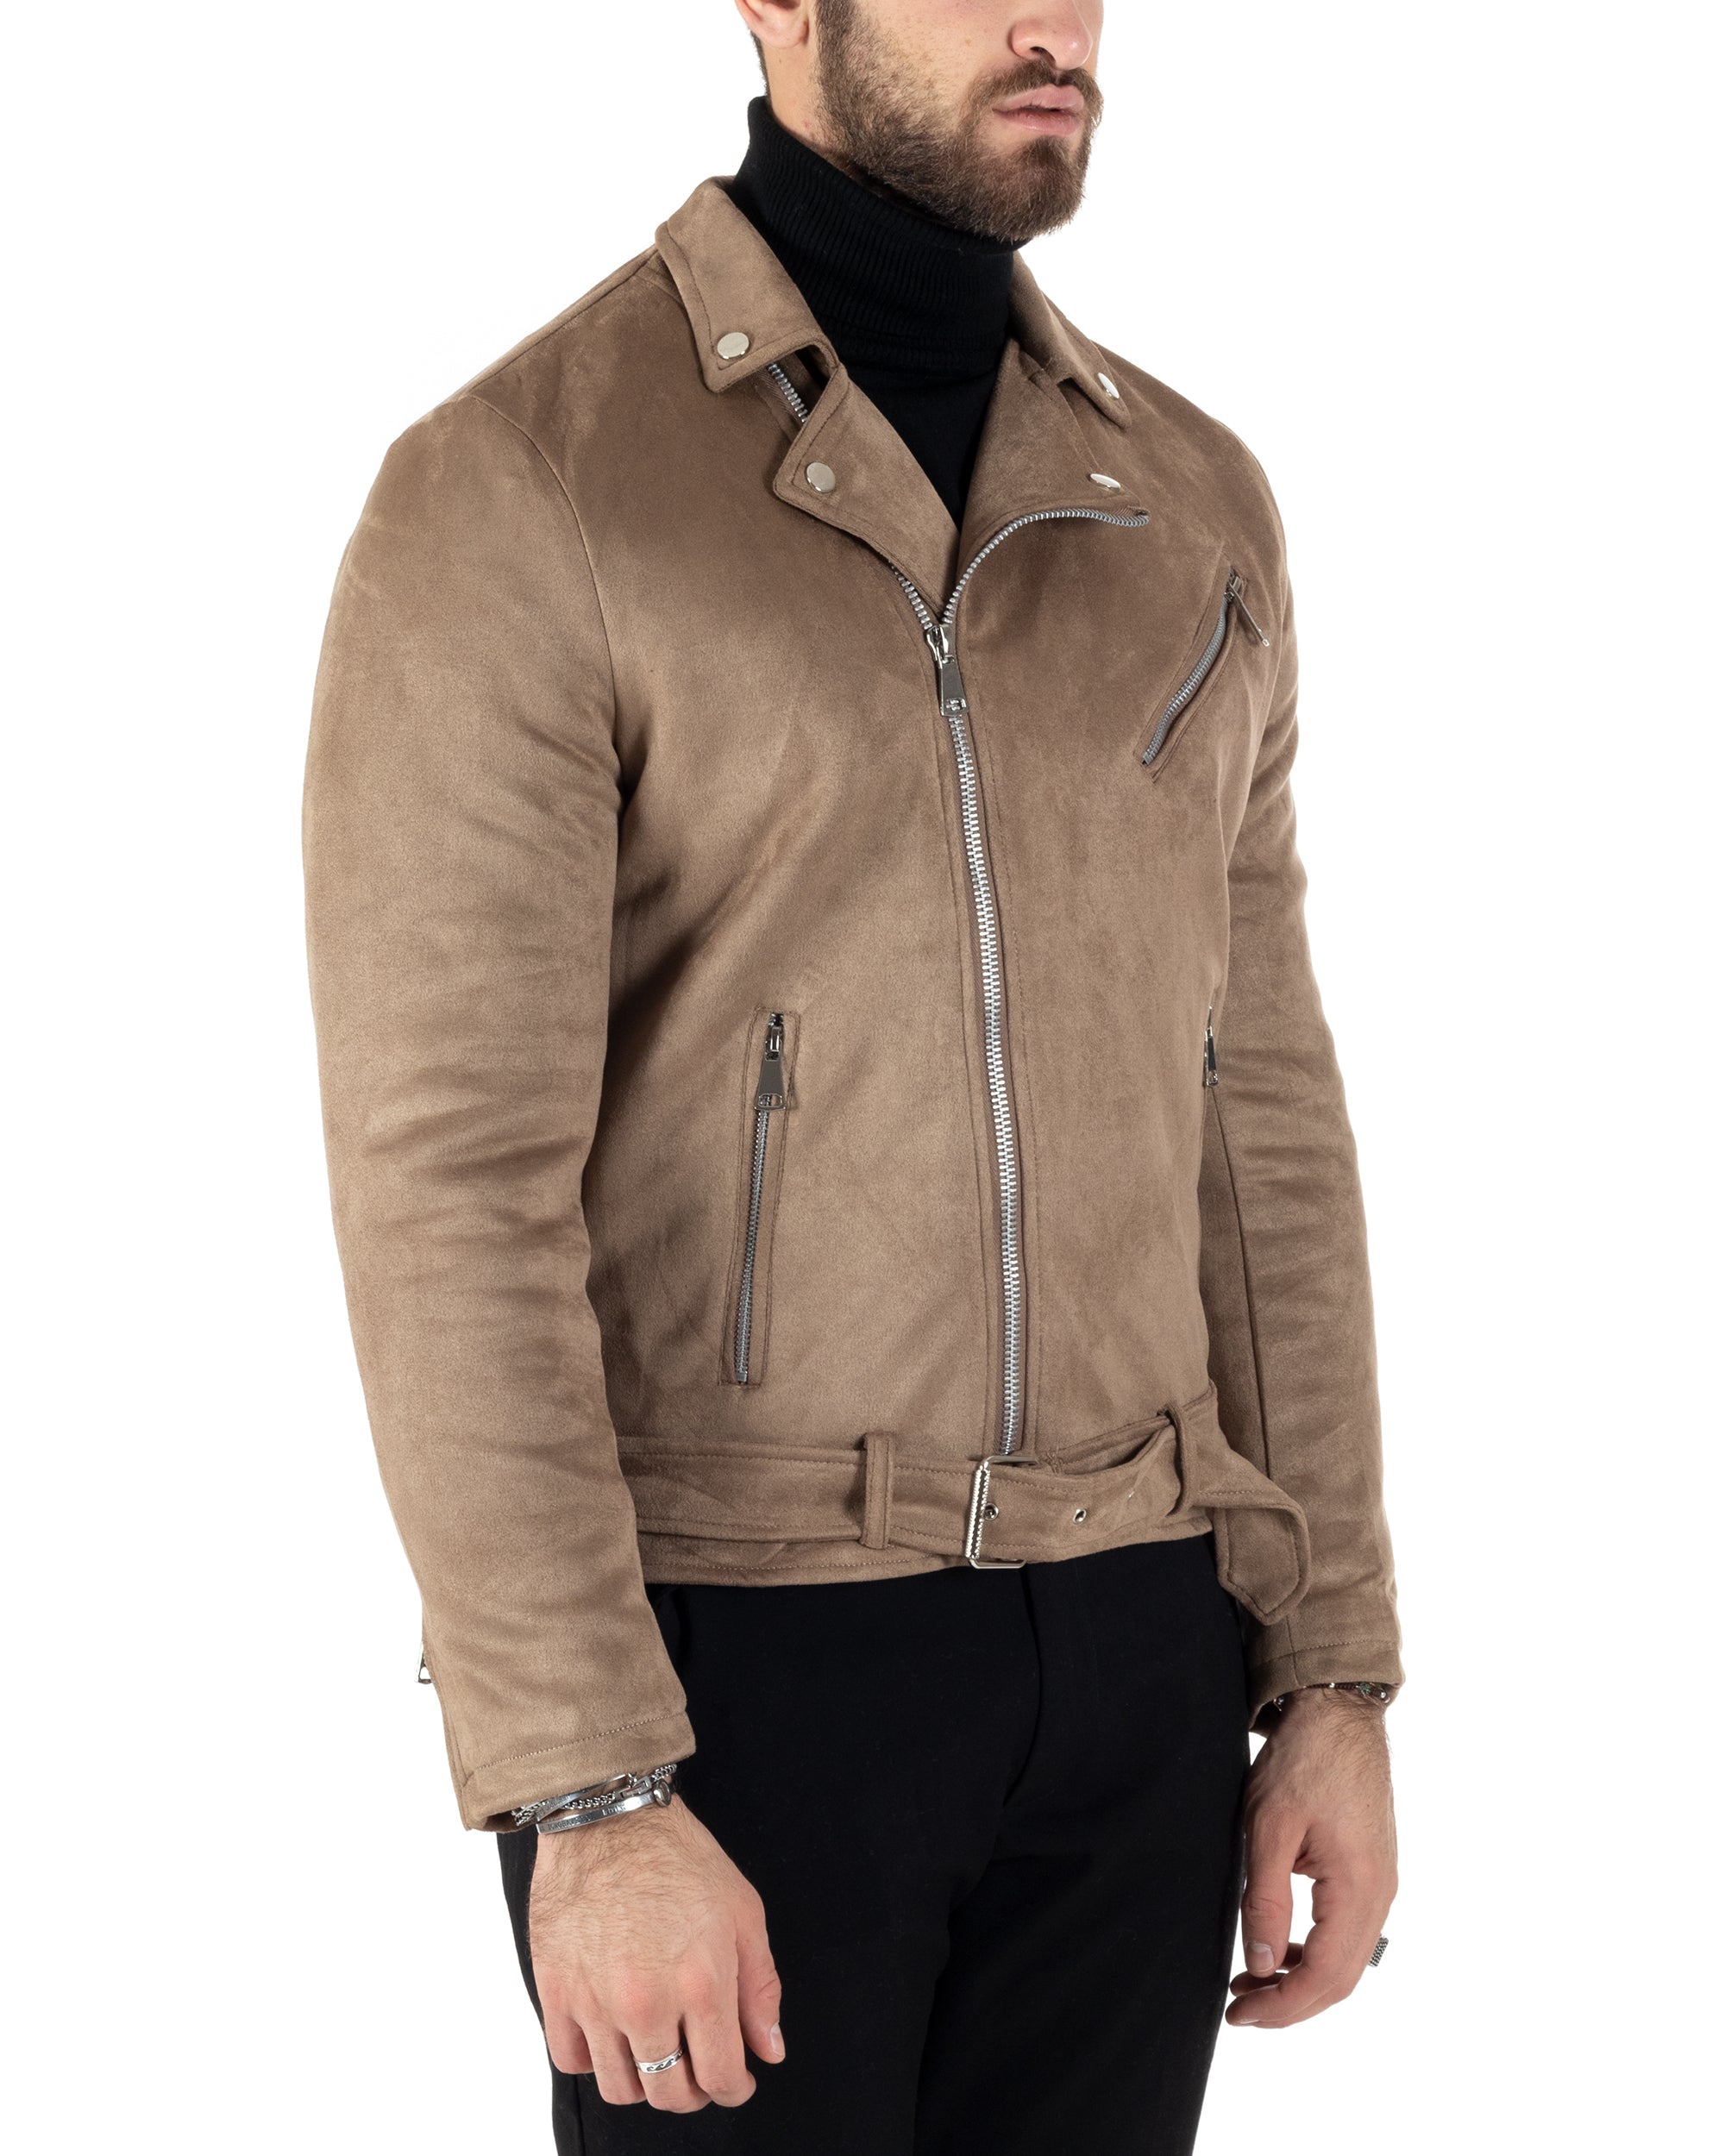 Men's Jacket Camel Suede Zip Casual Long Sleeve GIOSAL